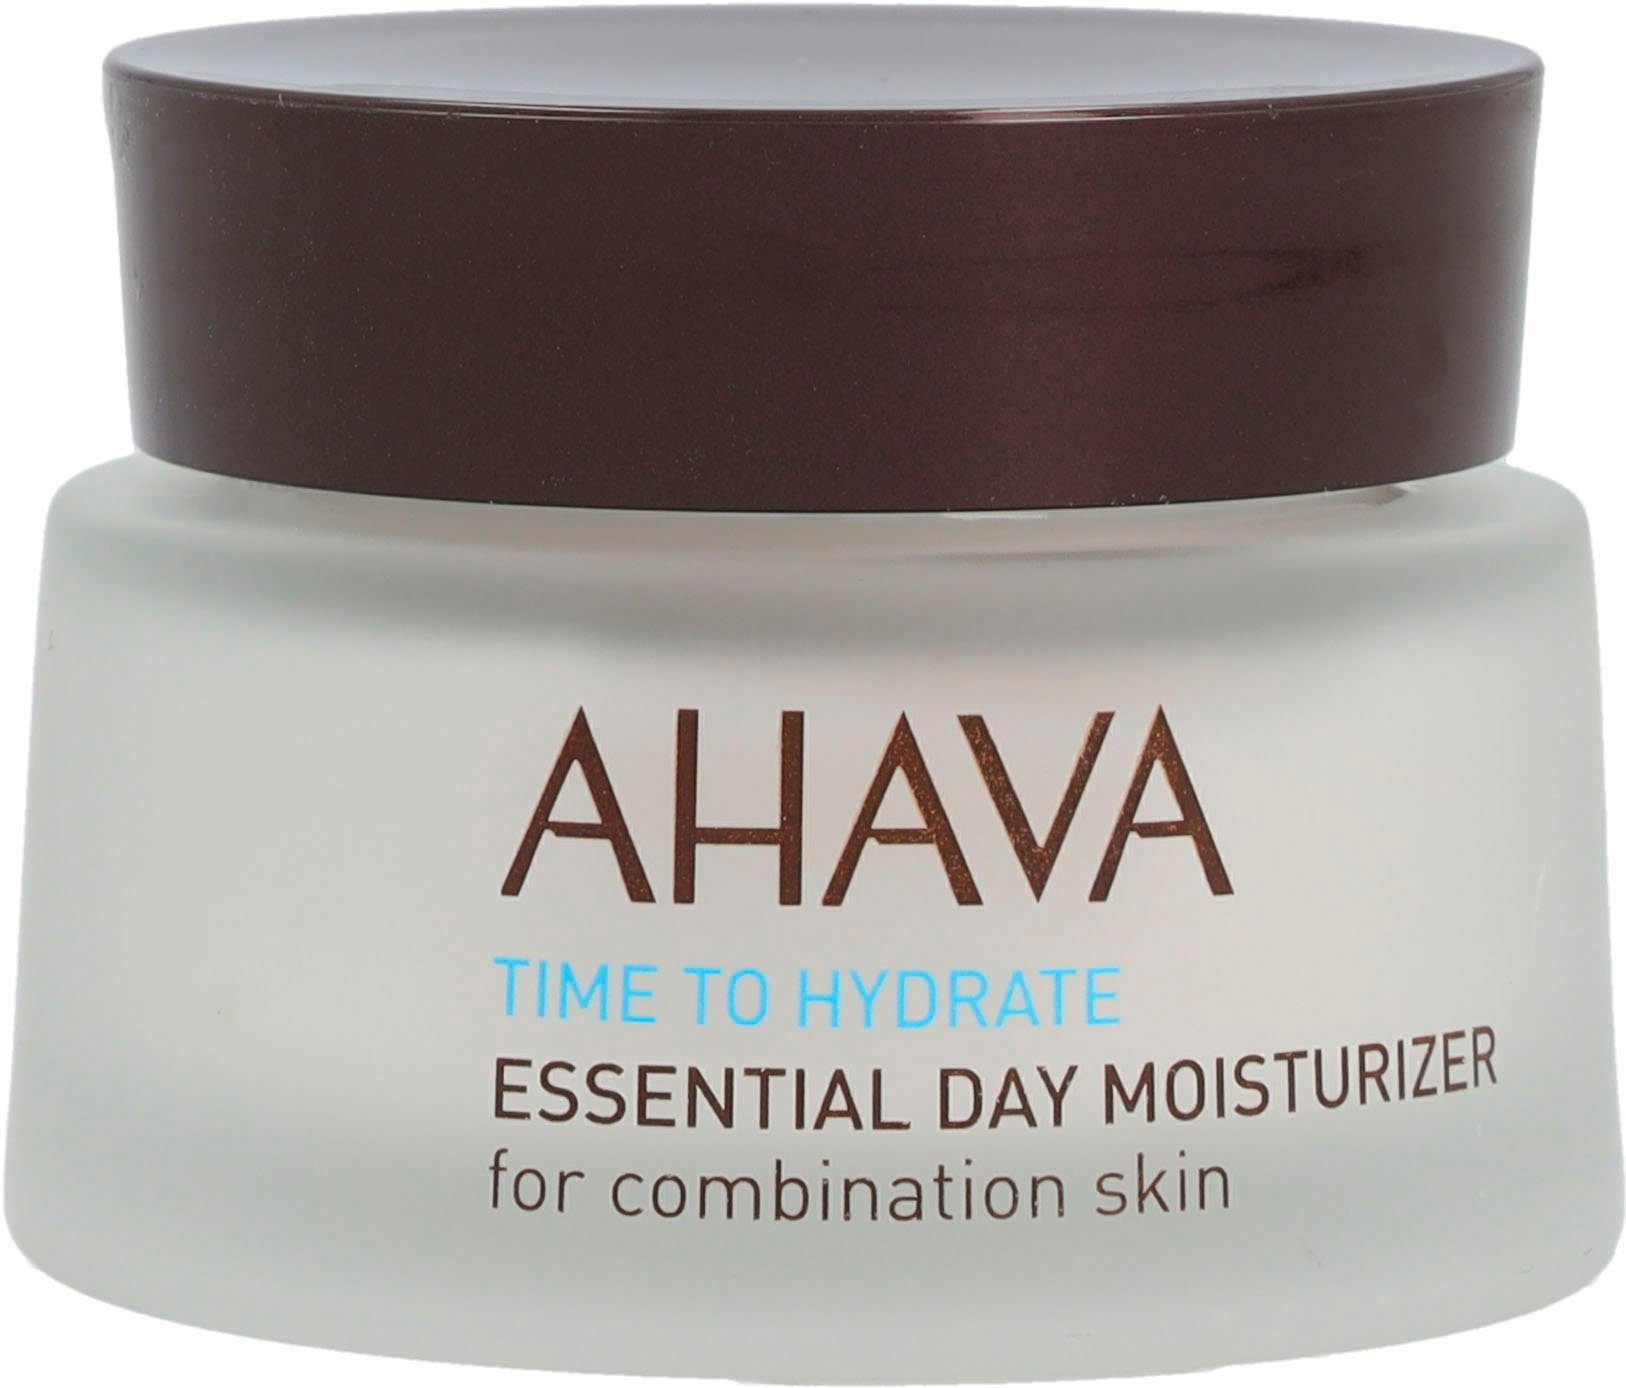 Essential Gesichtspflege Combination Hydrate Moisturizer AHAVA Time To Day